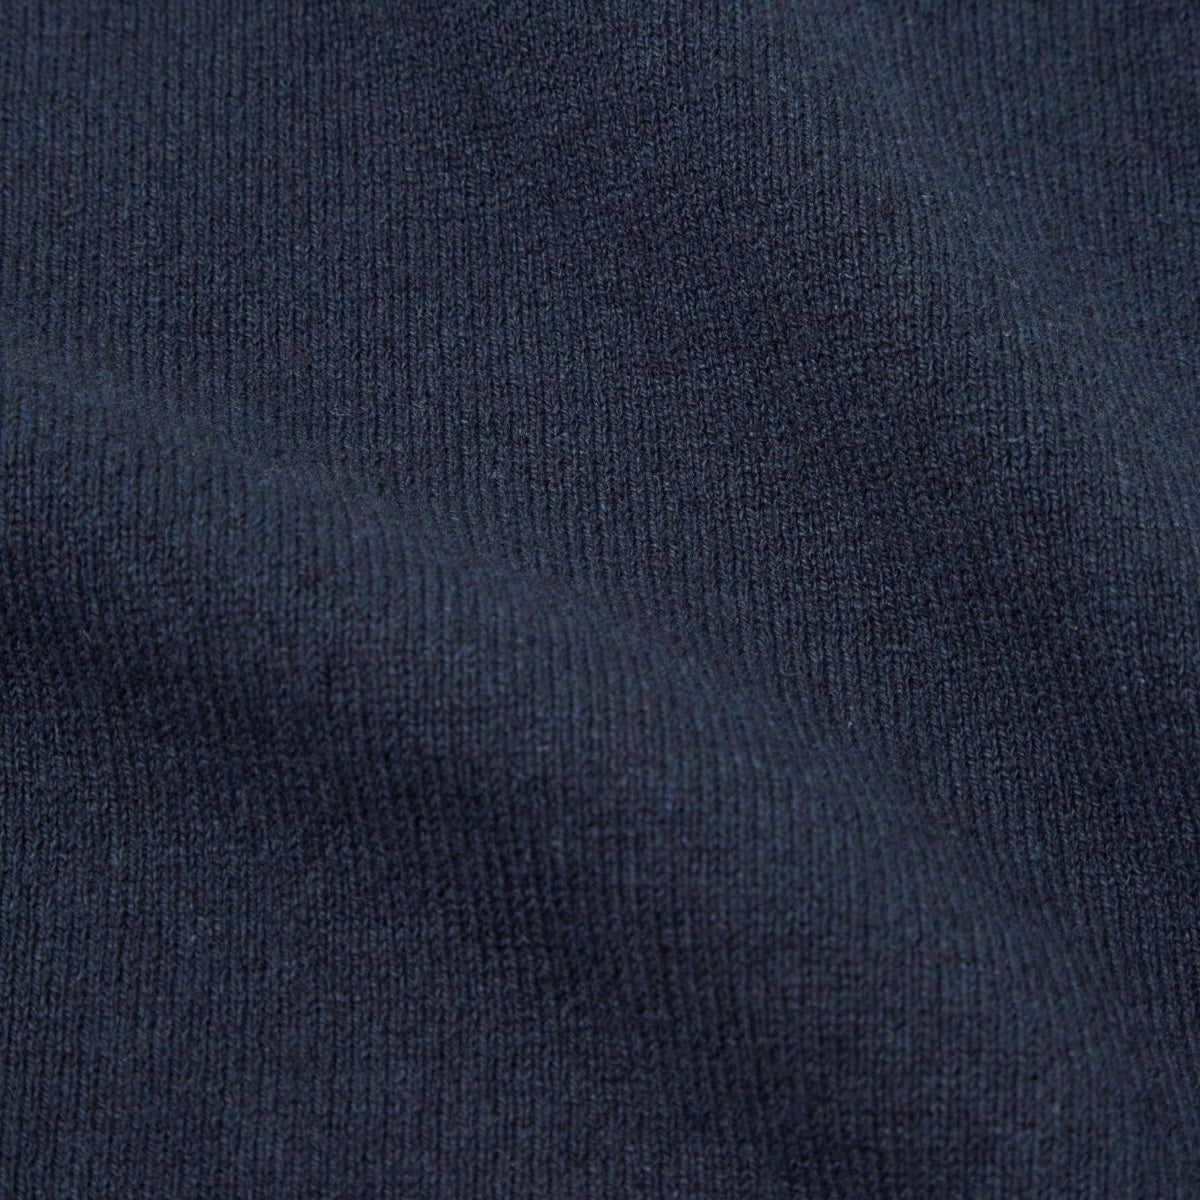 Universal Works Pullover Knit Shirt Eco Cotton 30453 indigo